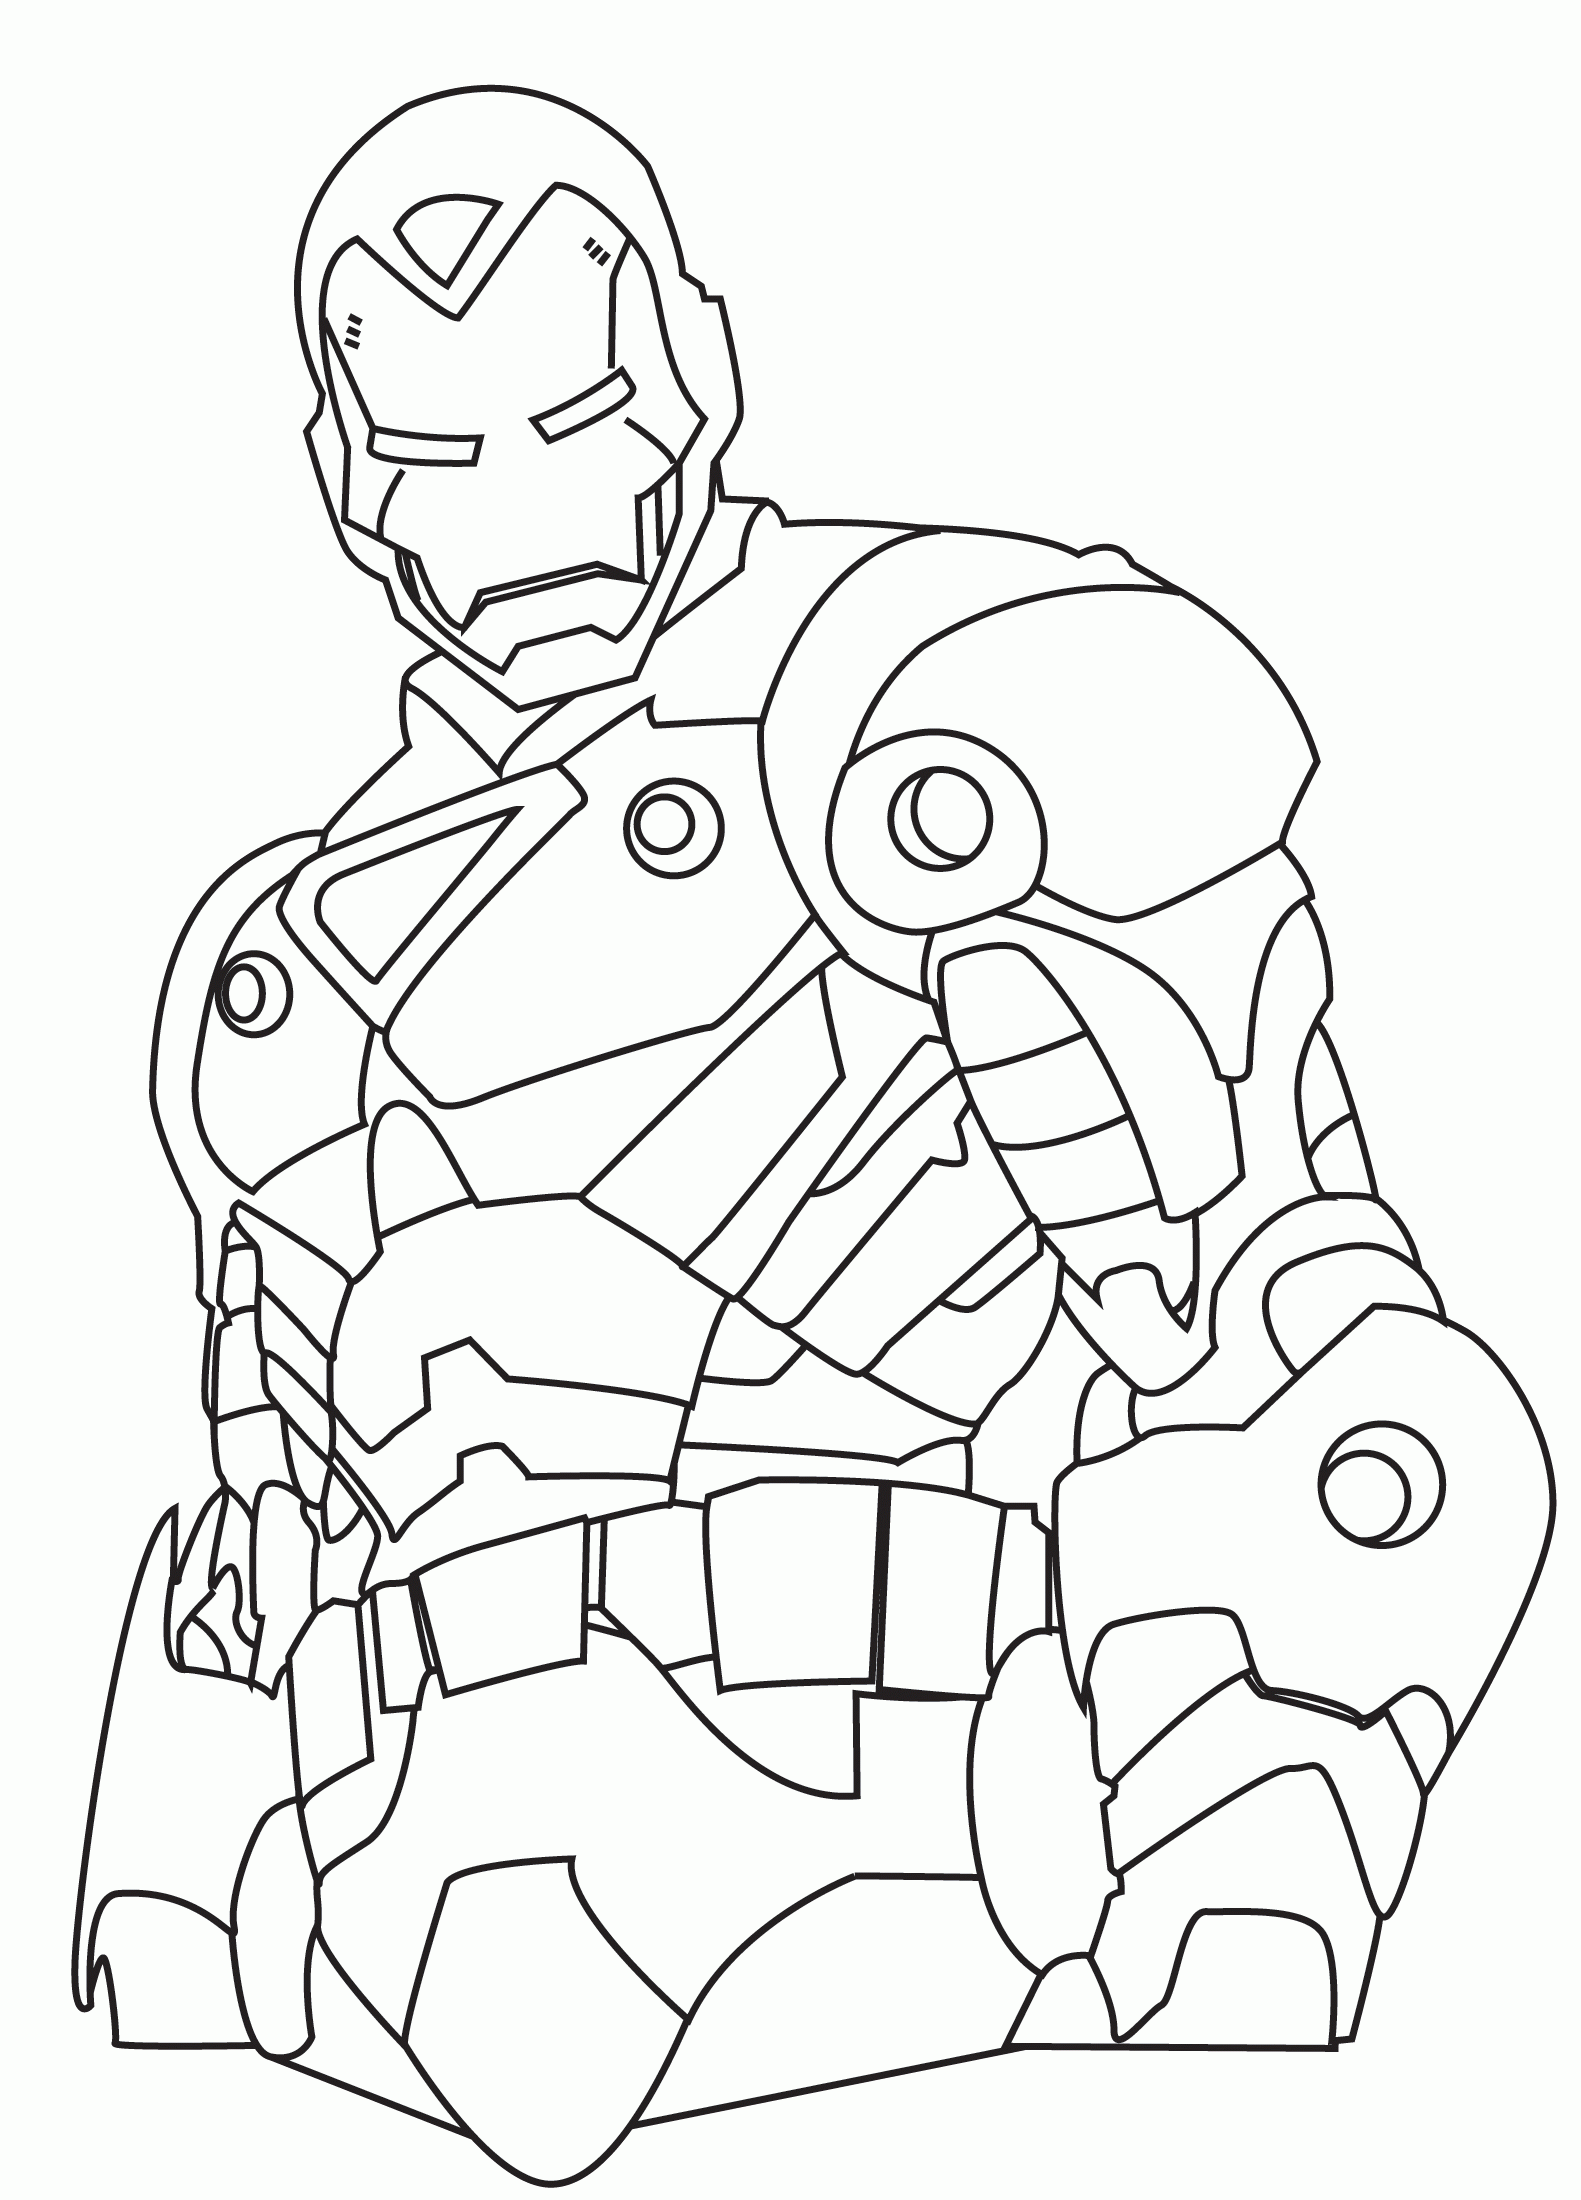 Download Iron Man 4k Drawing Wallpaper | Wallpapers.com